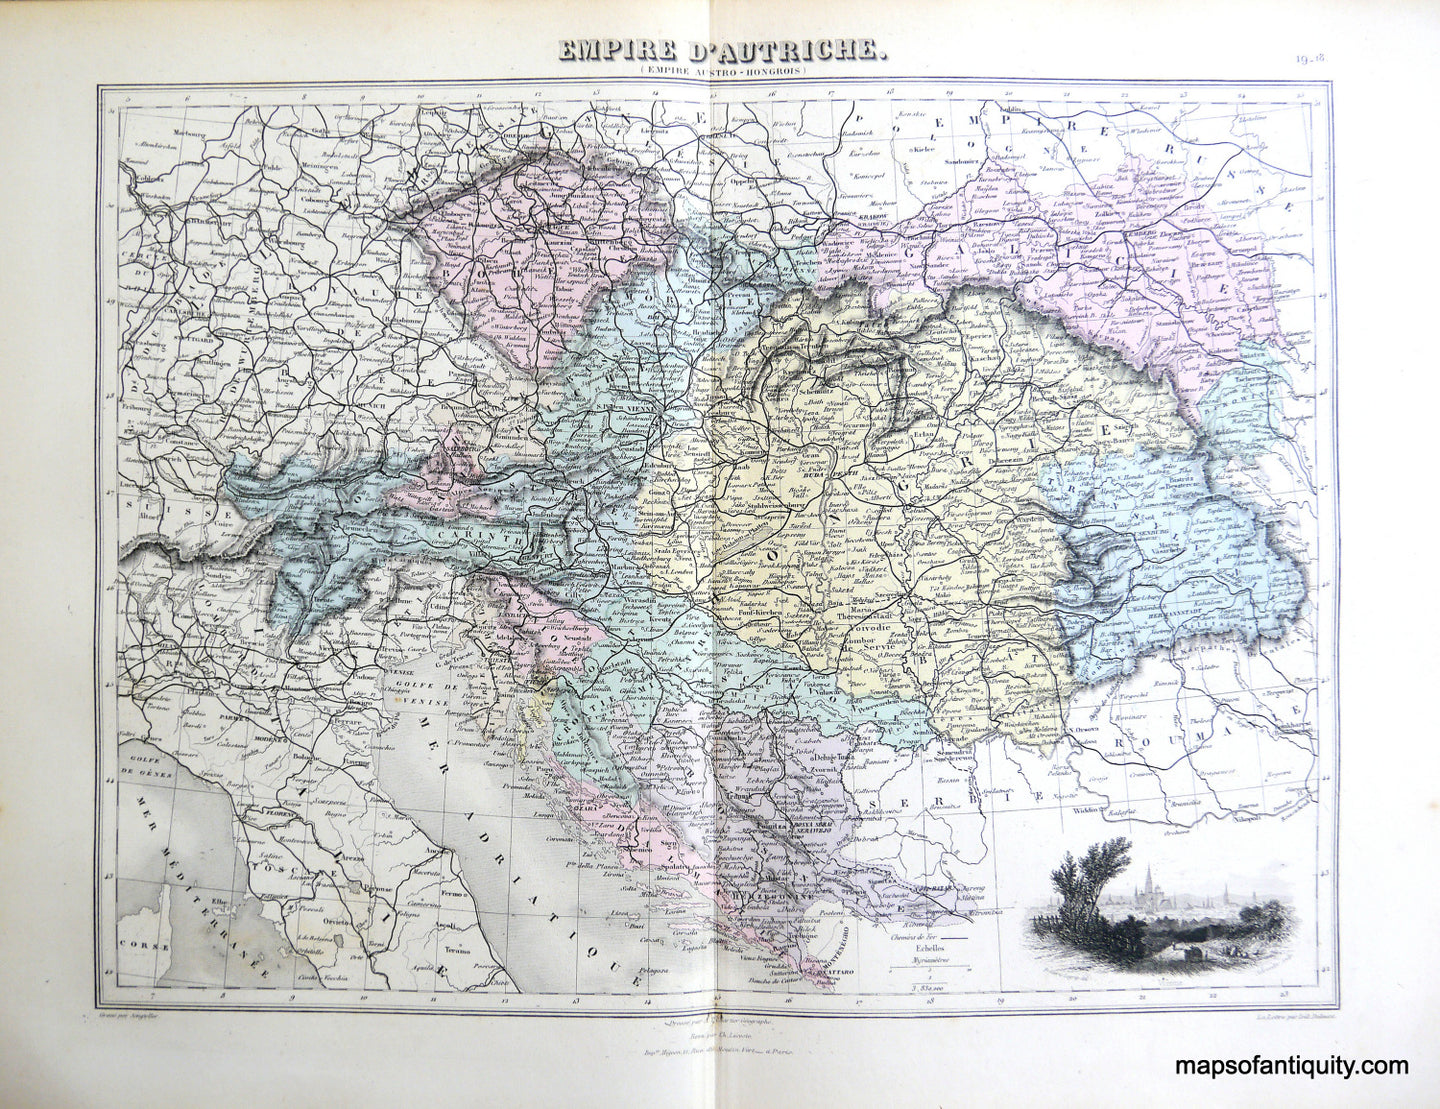 Antique-Hand-Colored-Map-Empire-d'Autriche.-Europe-Austria-1884-Migeon-Maps-Of-Antiquity